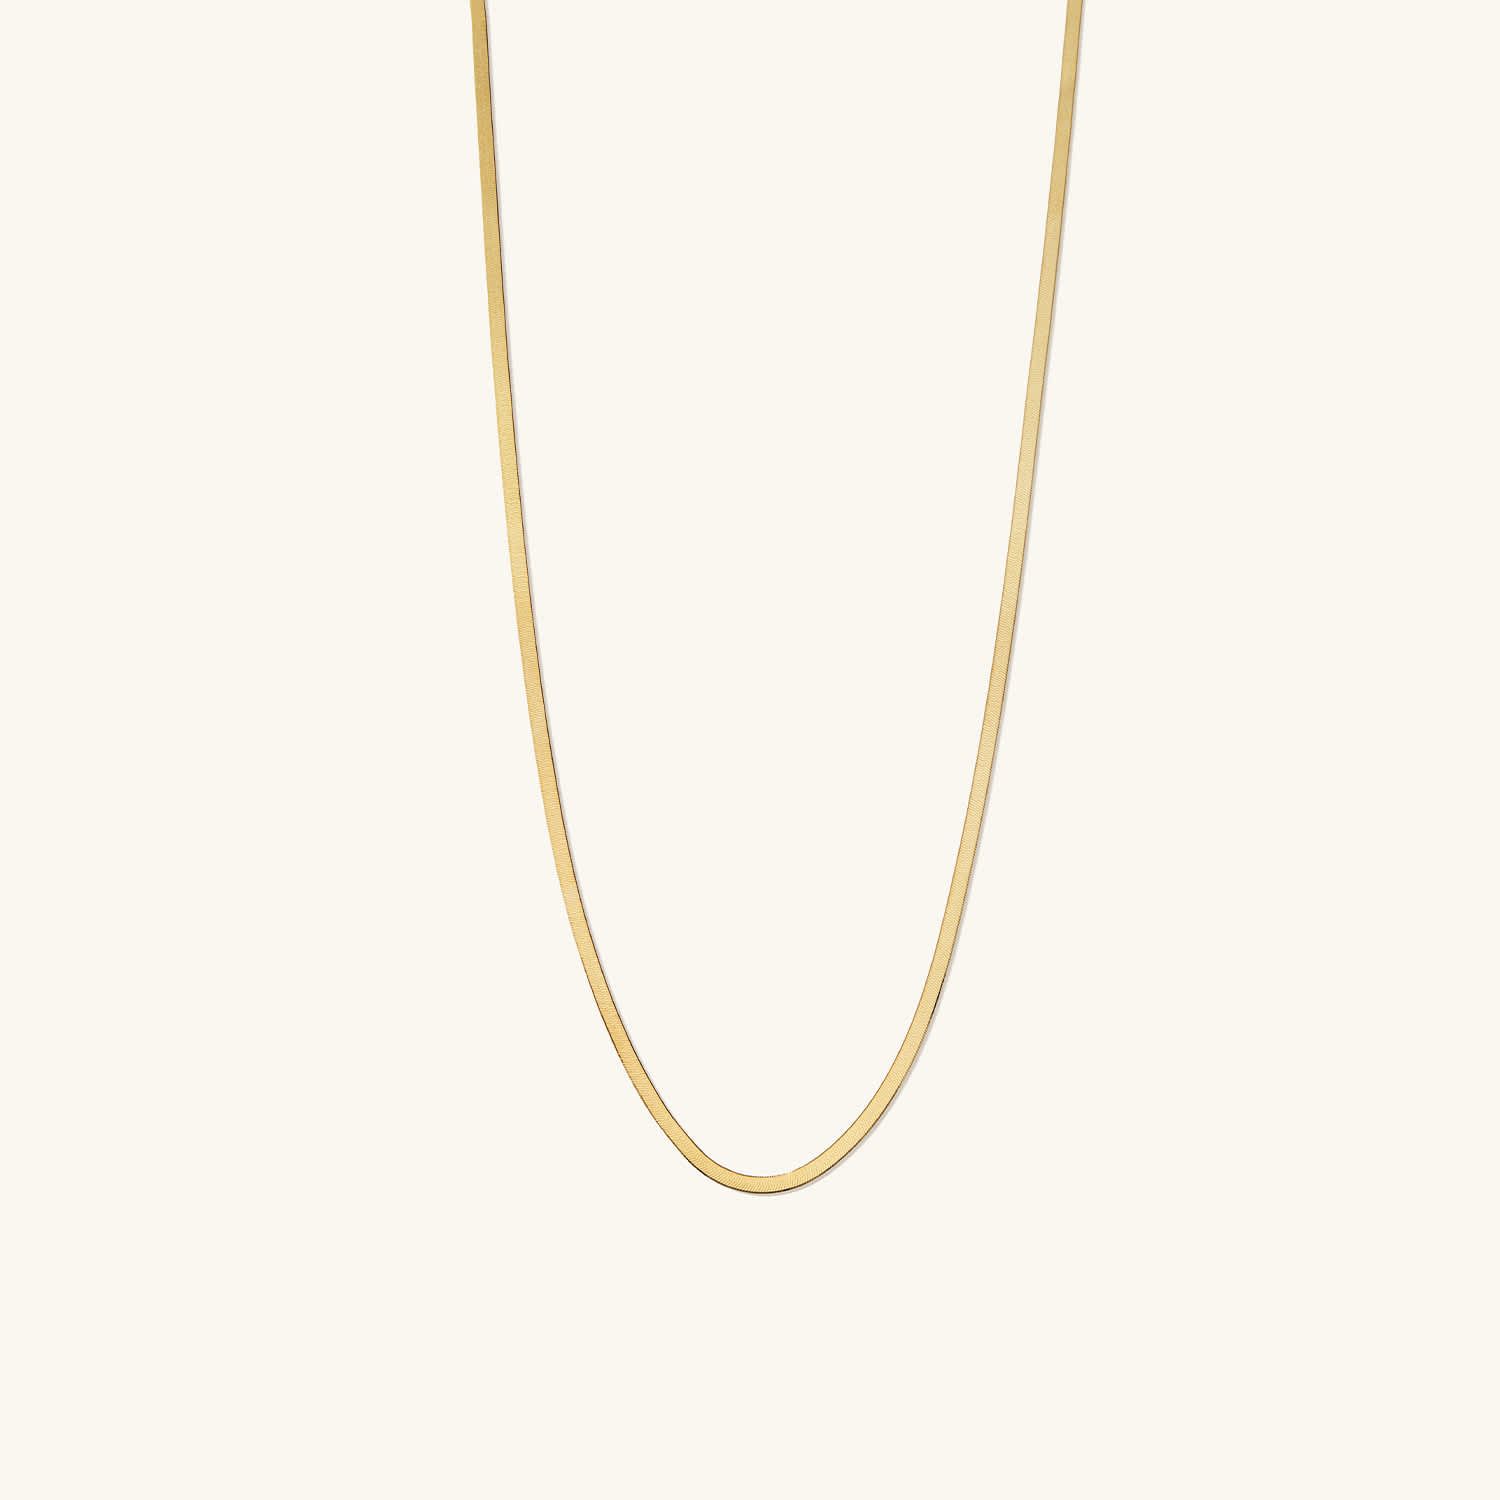 Jenna Lyons Herringbone Chain Necklace | Mejuri (Global)